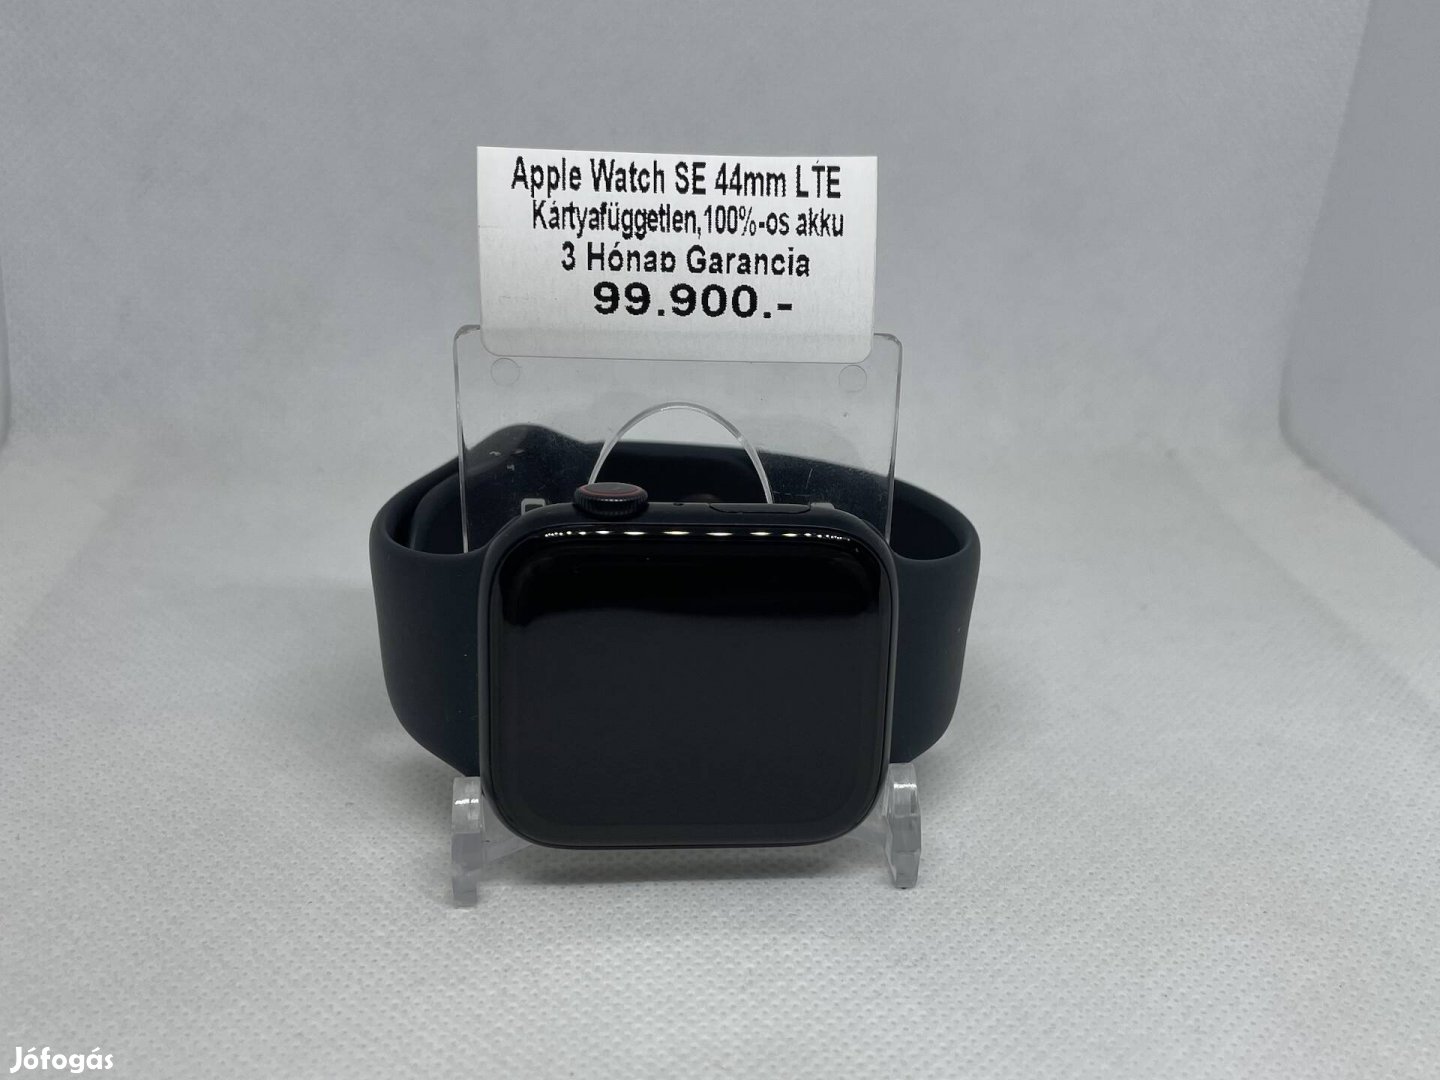 Apple Watch SE 2. 44mm LTE